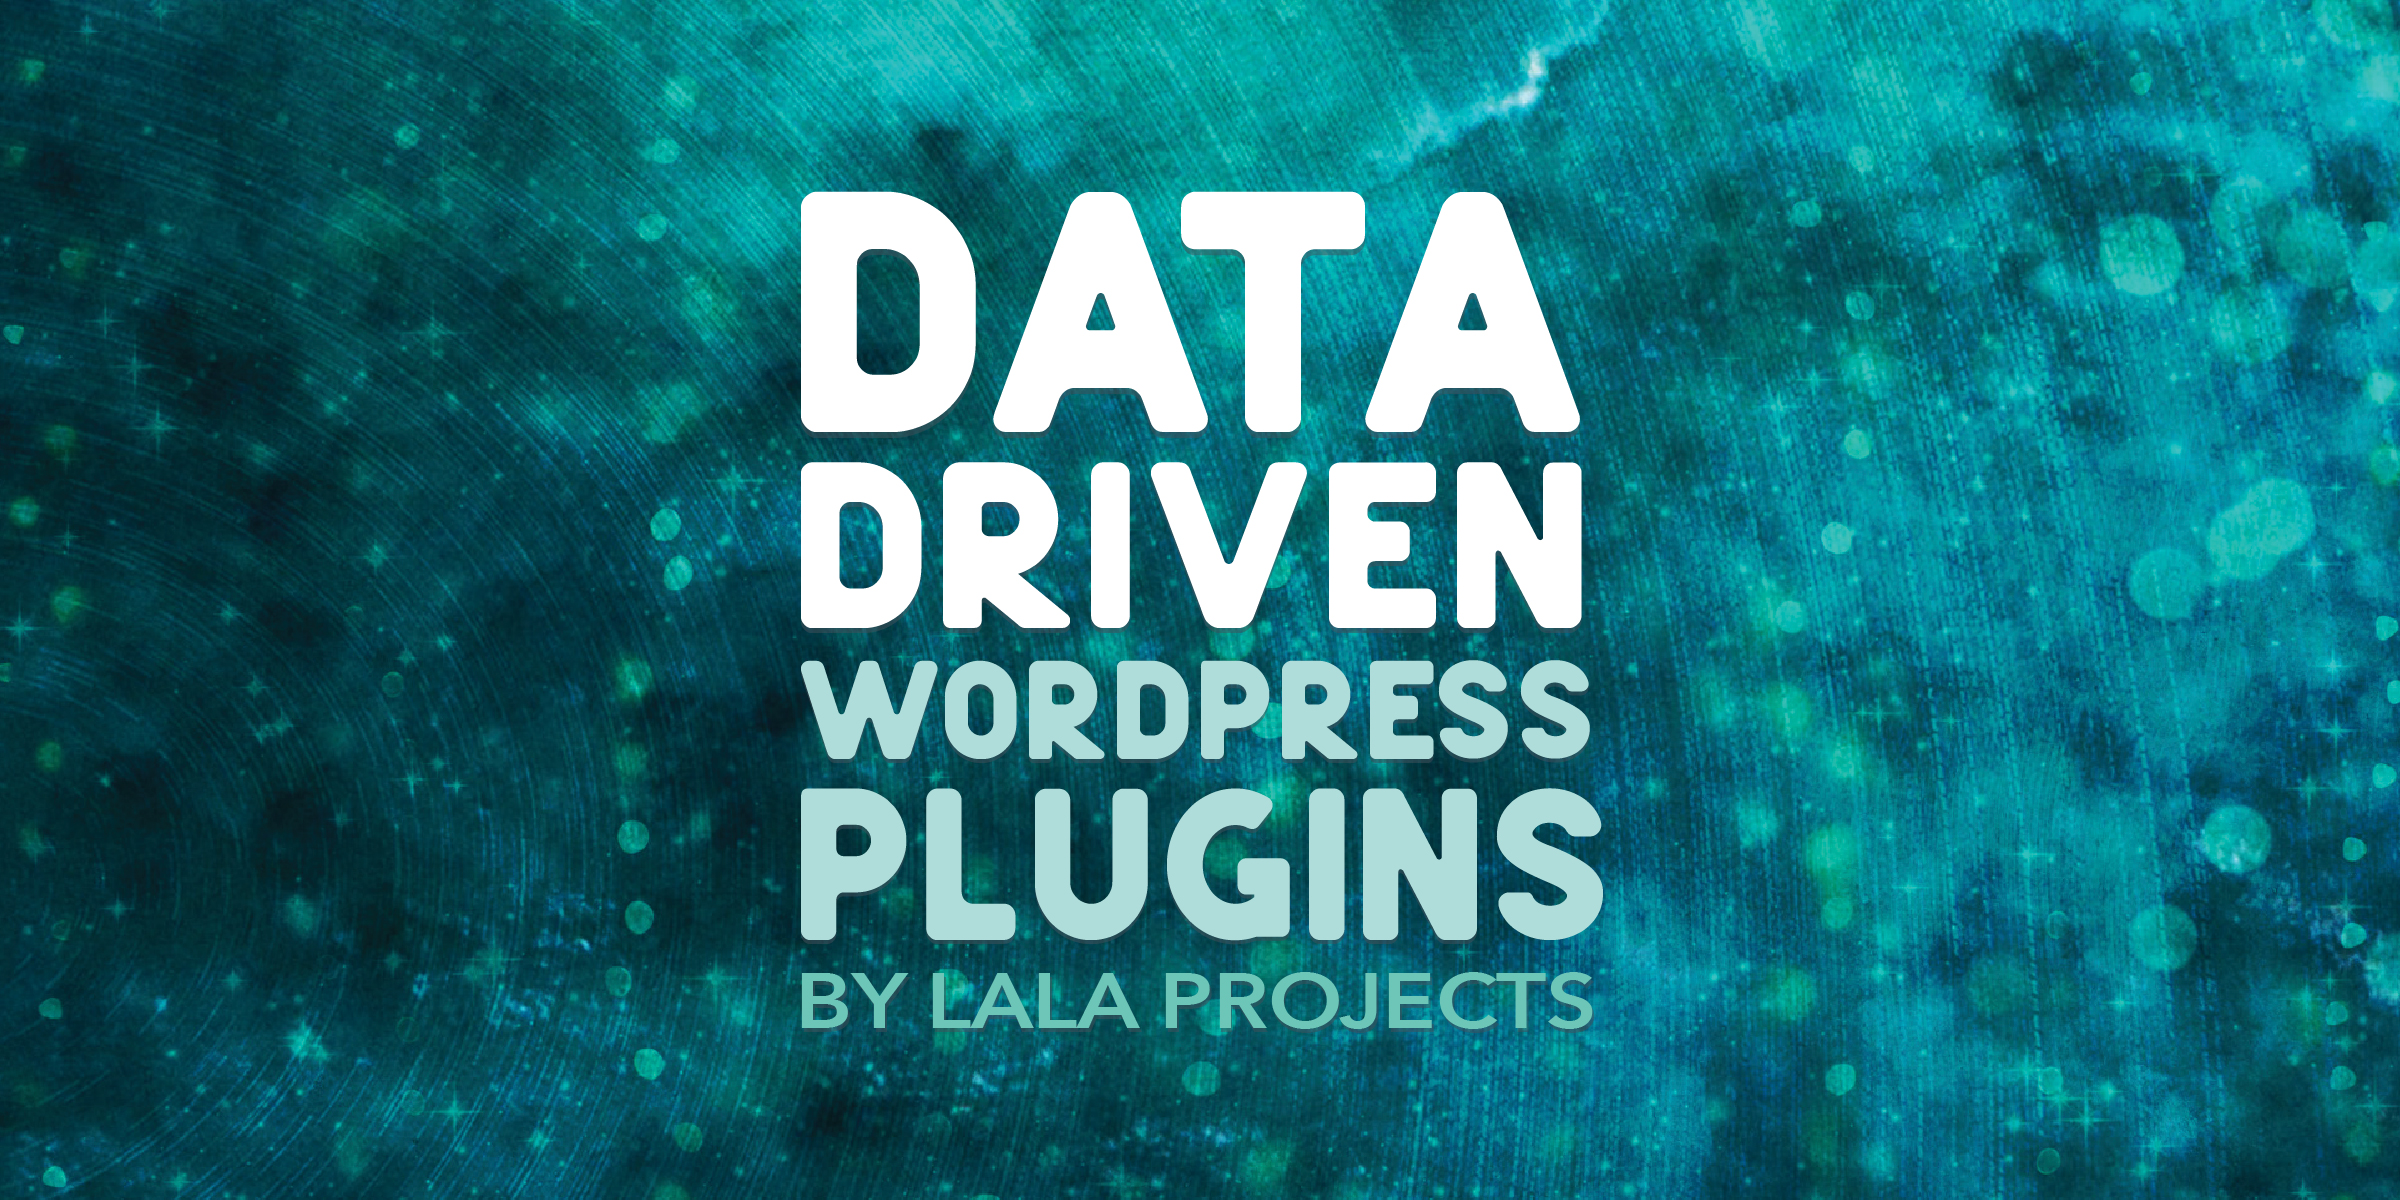 Data Drive WordPress Plugins by LaLa Projects